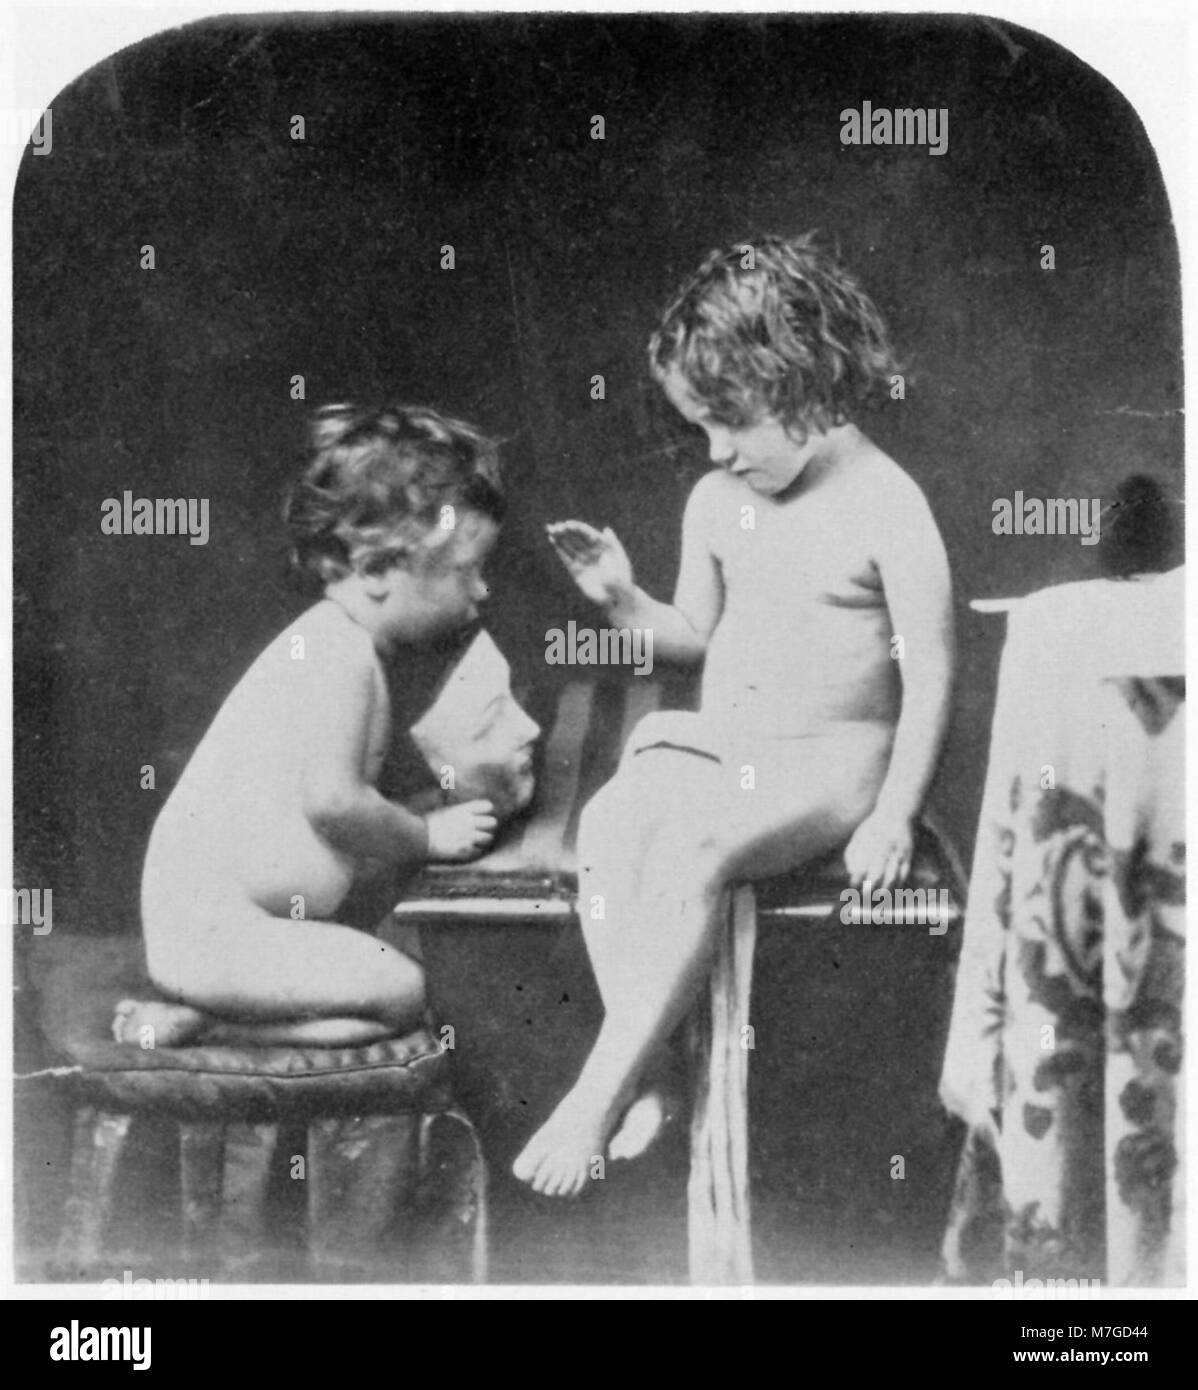 Rejlander, Oskar Gustav - Kinder mit einer Maske spielend (Zeno Fotografie) Stock Photo